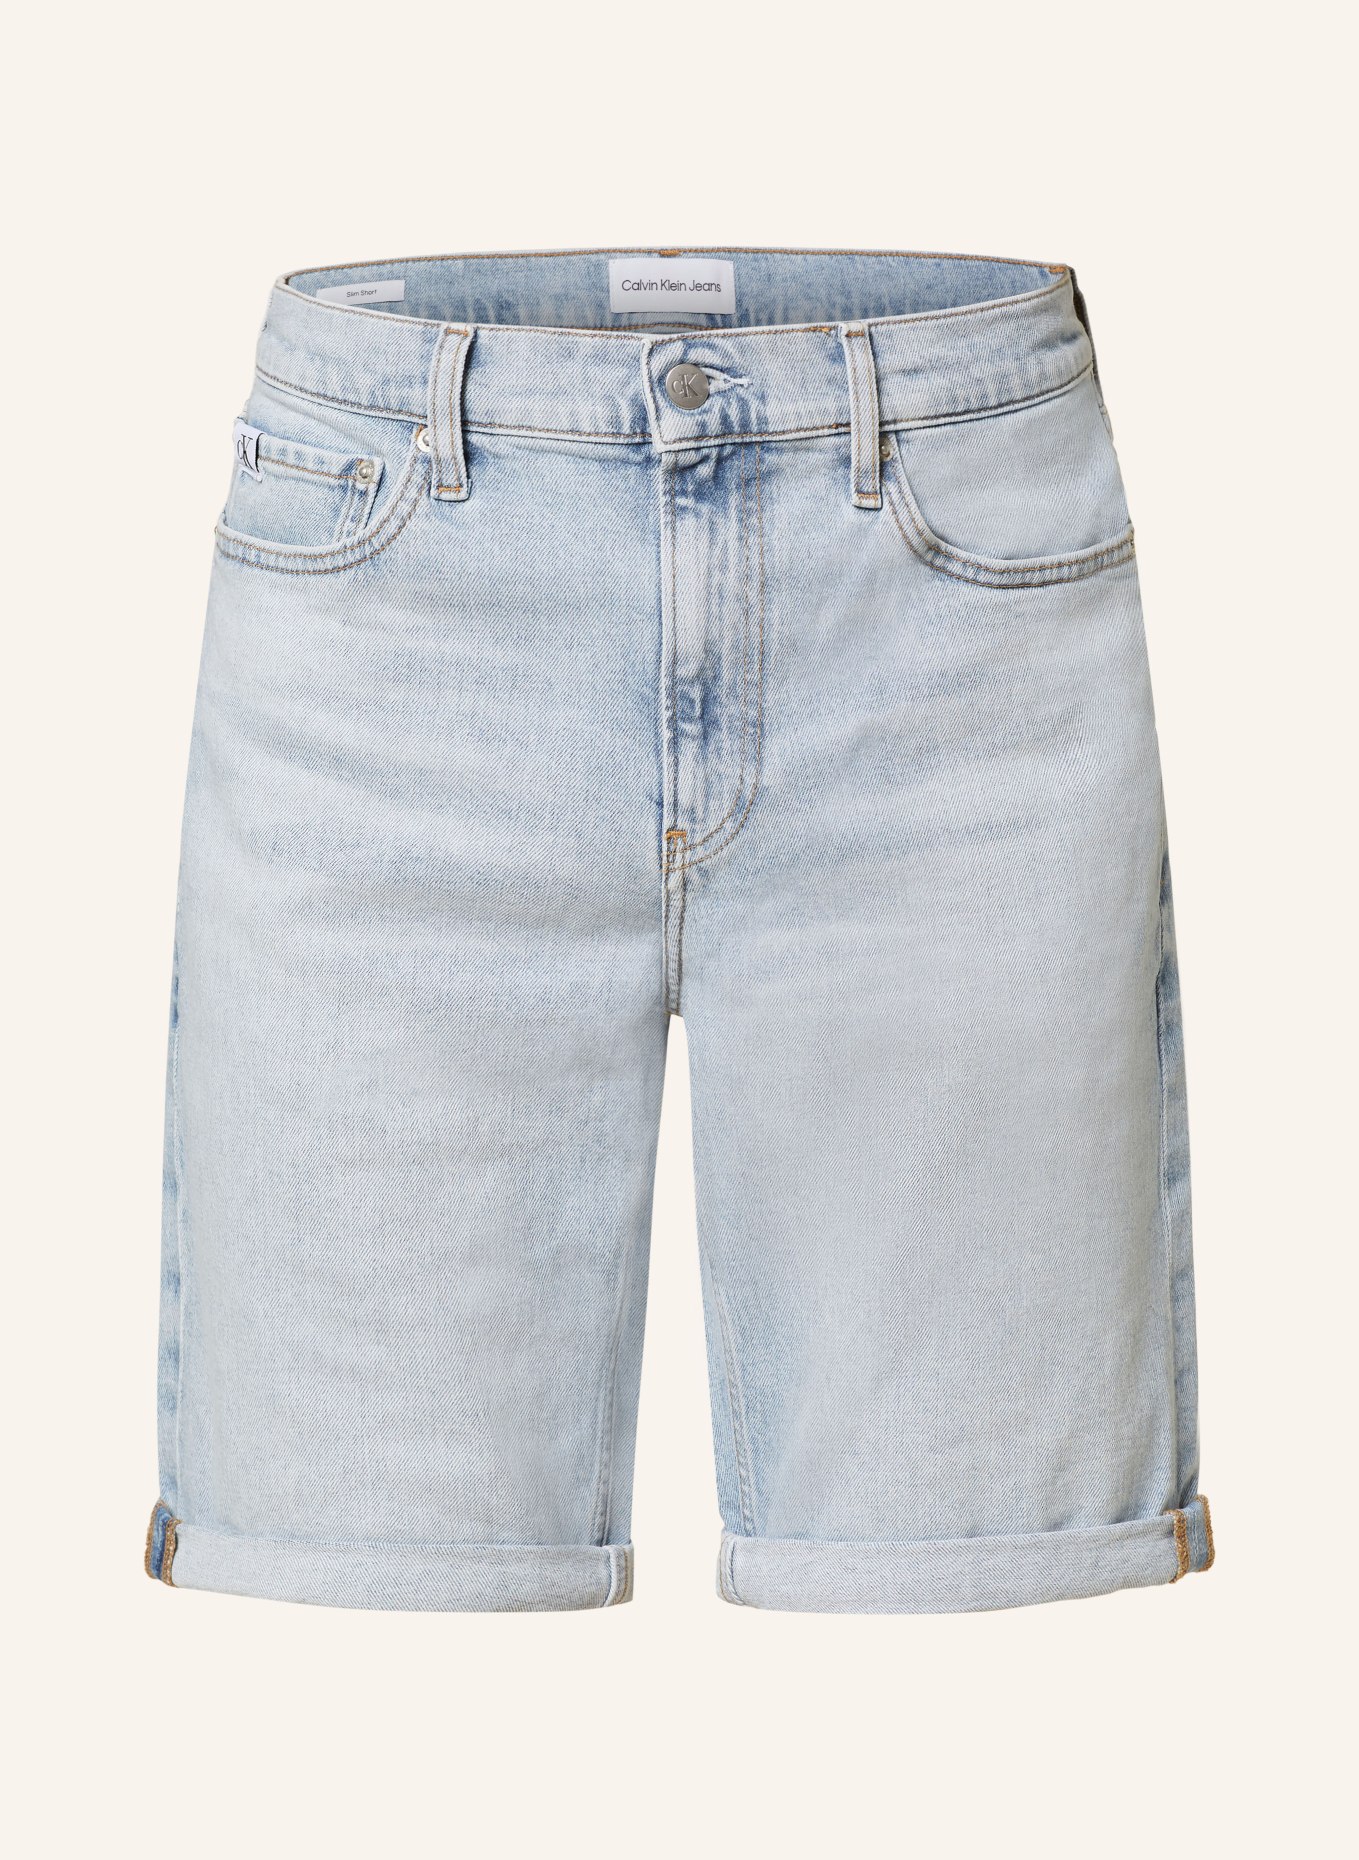 Calvin Klein Jeans Jeansshorts Slim Fit, Farbe: 1AA Denim Light (Bild 1)